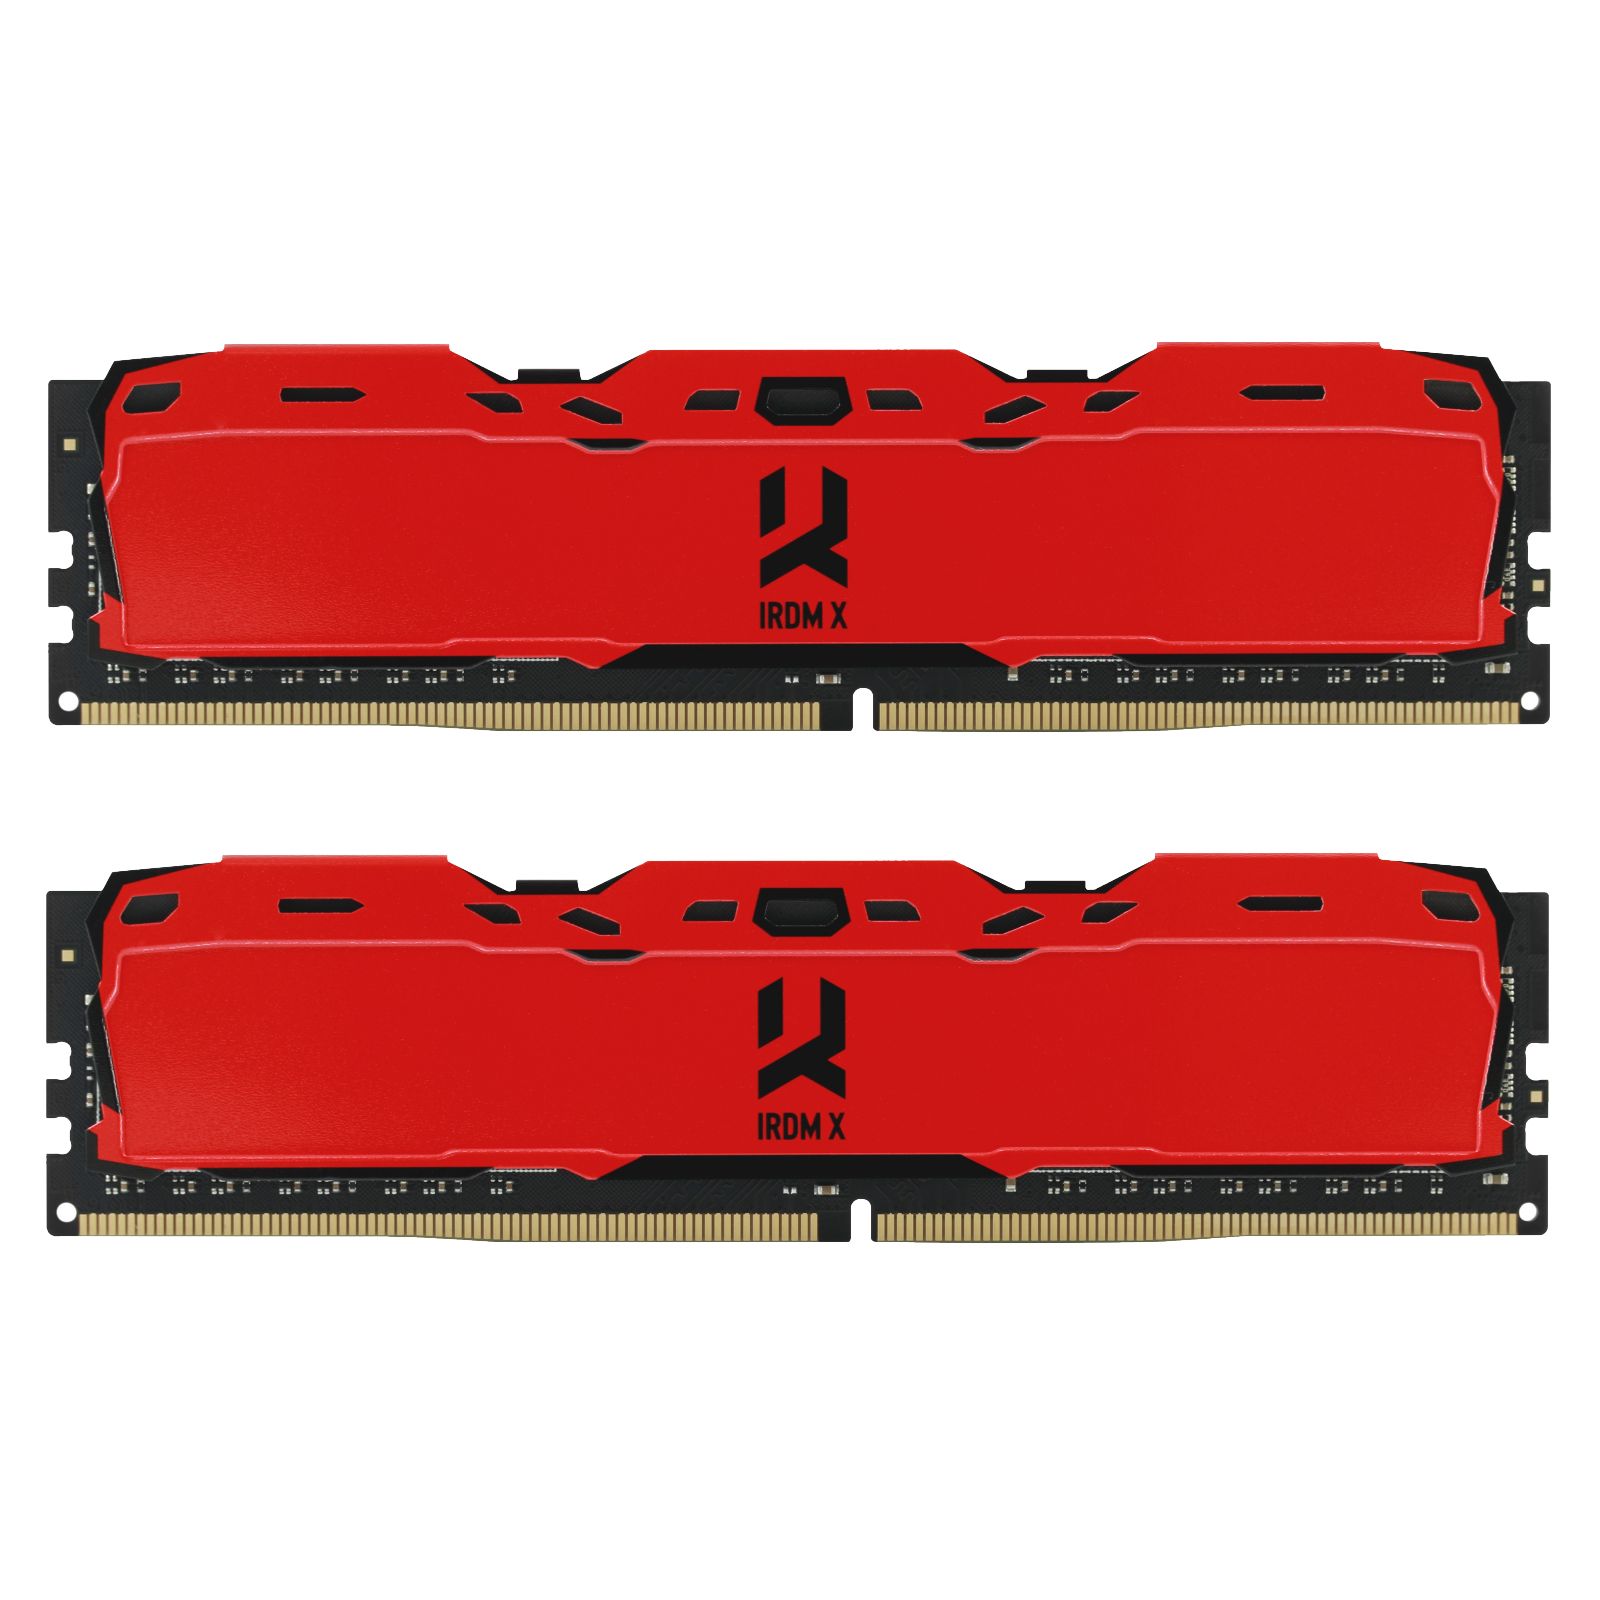 GOODRAM DDR4 16GB 3200 CL16 DUAL IRDM X RED_1